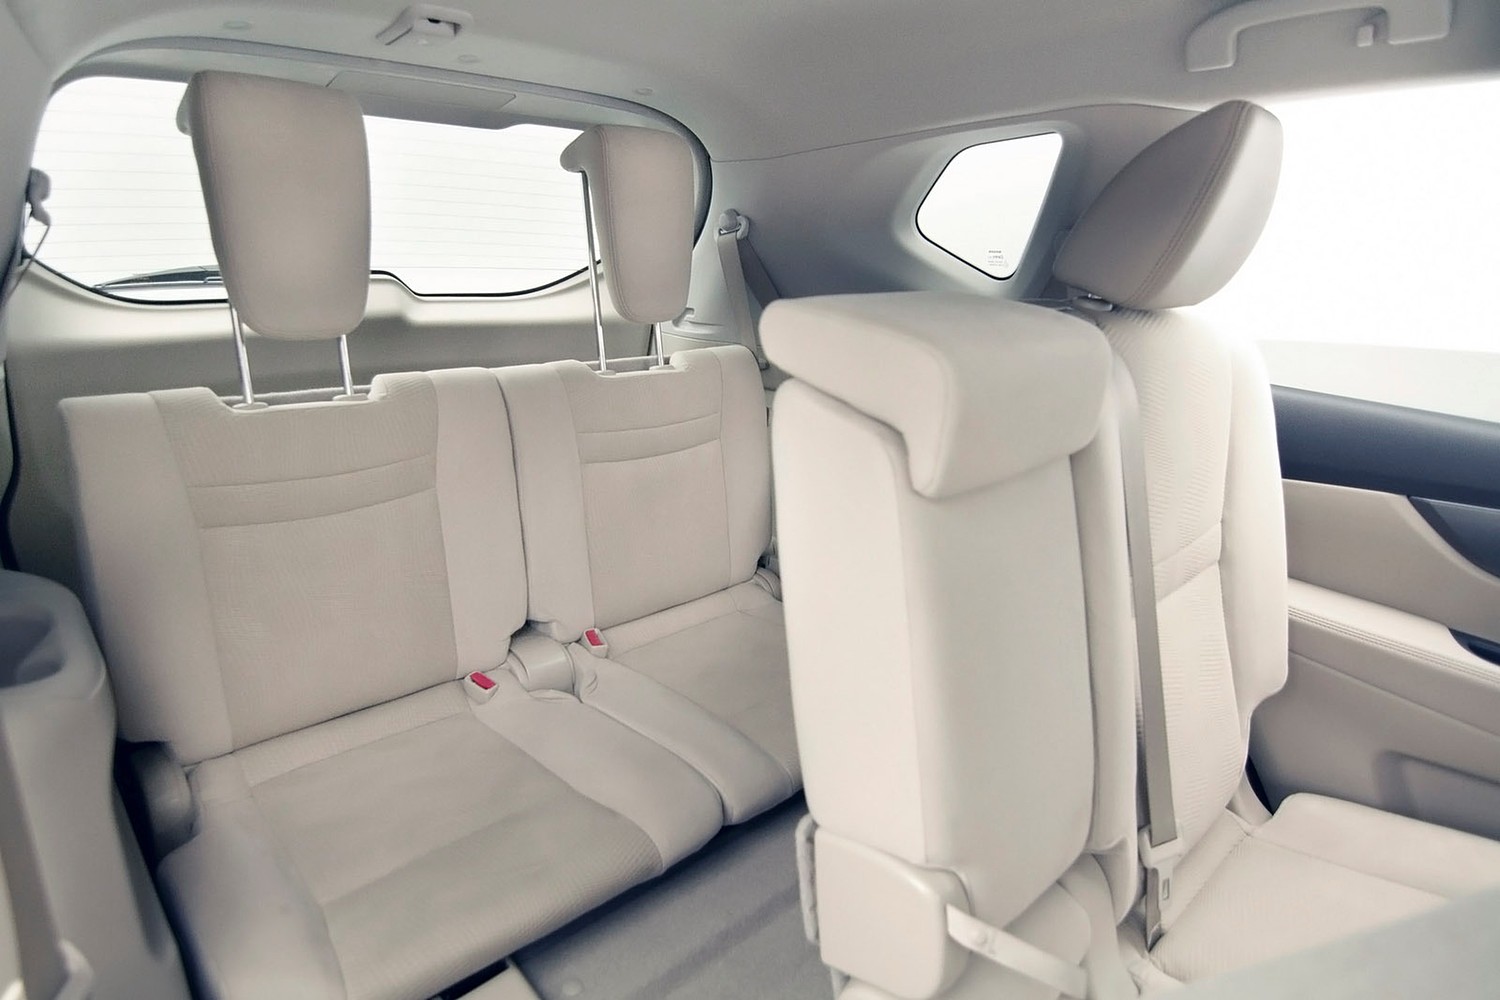 Nissan Rogue SL 4dr SUV Rear Interior (2014 model year shown)